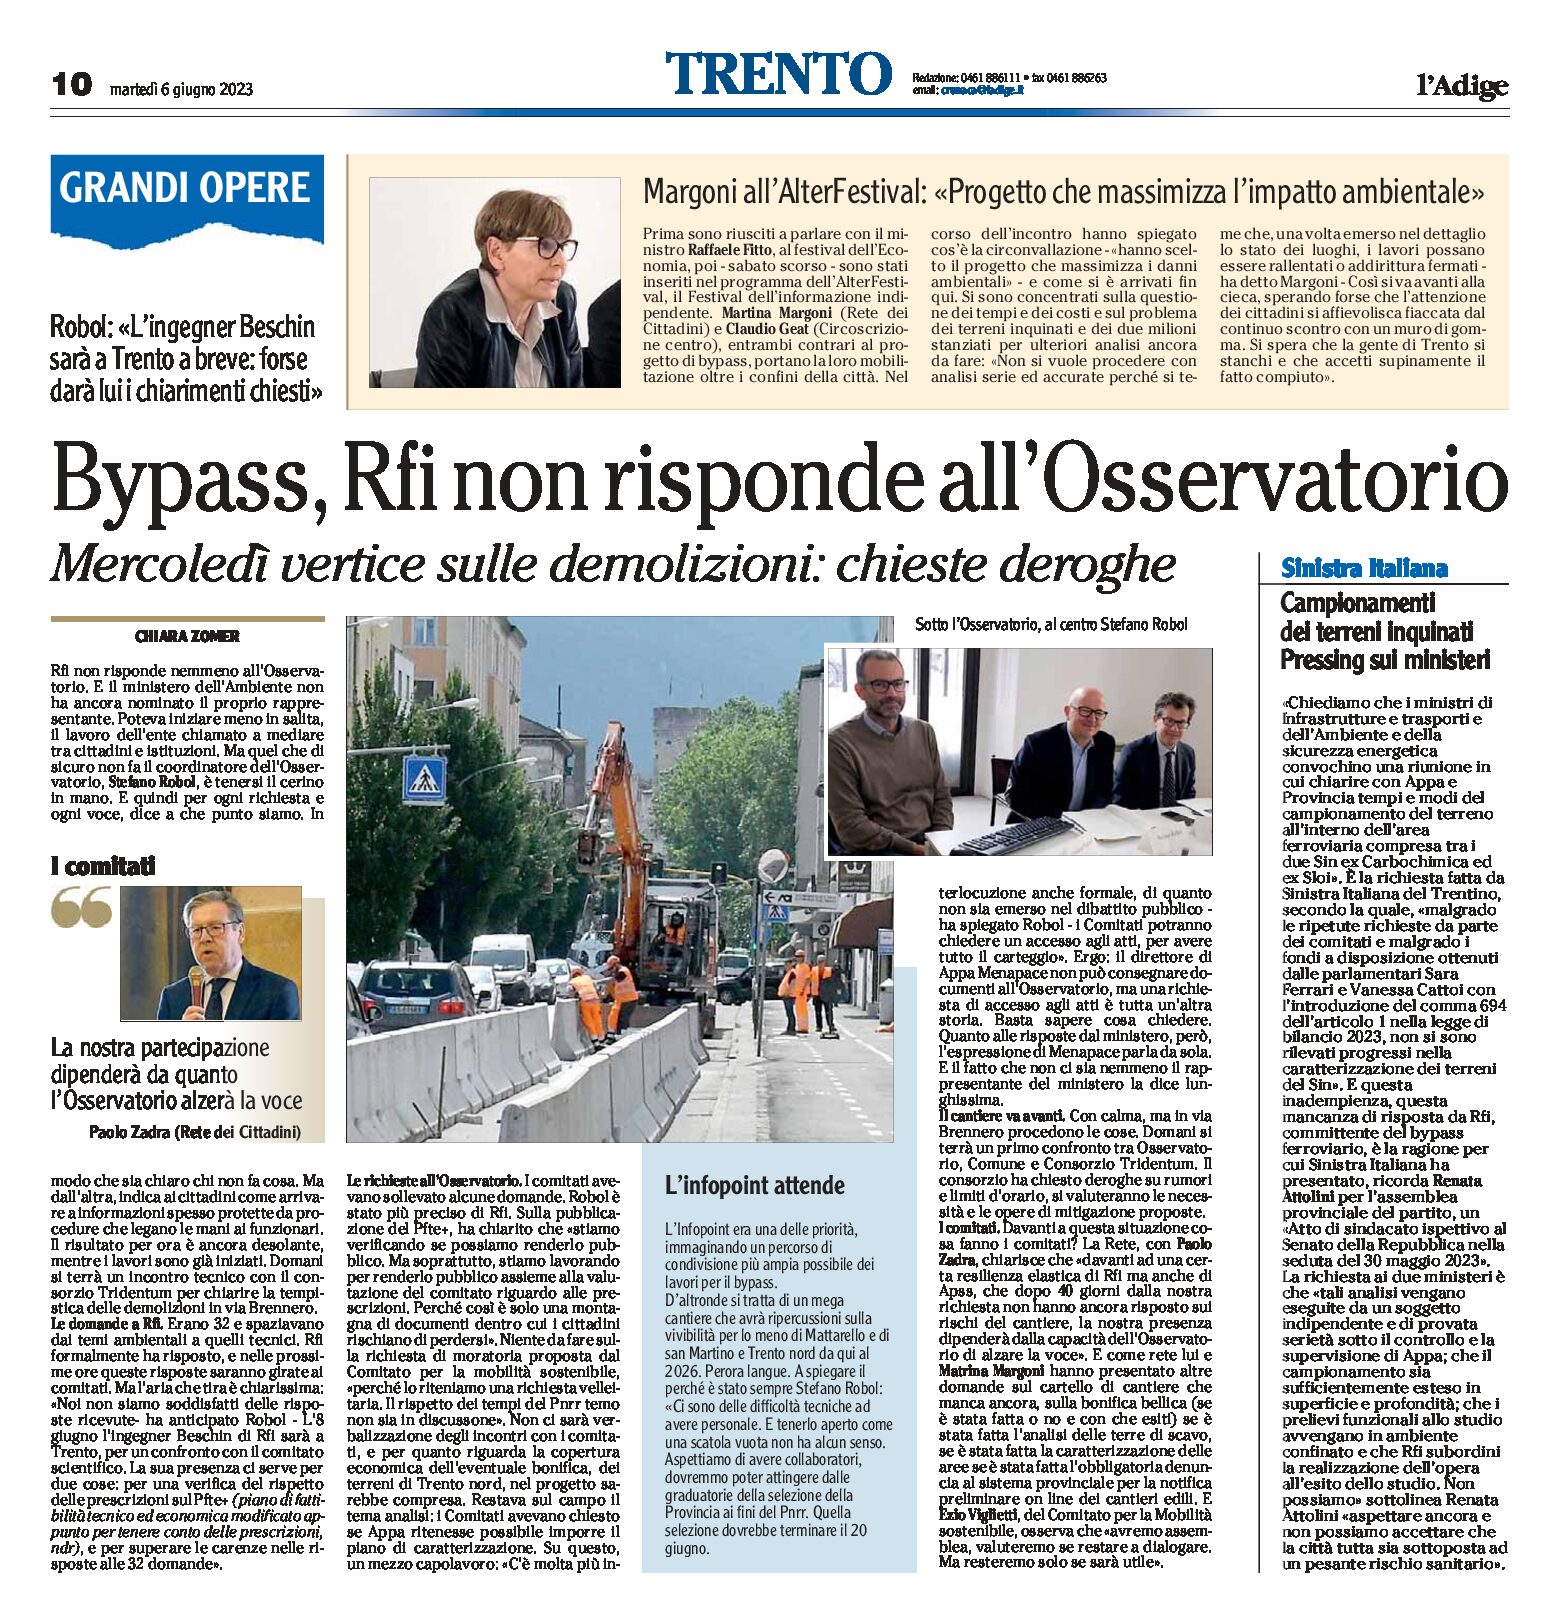 Trento, bypass: Rfi non risponde all’Osservatorio